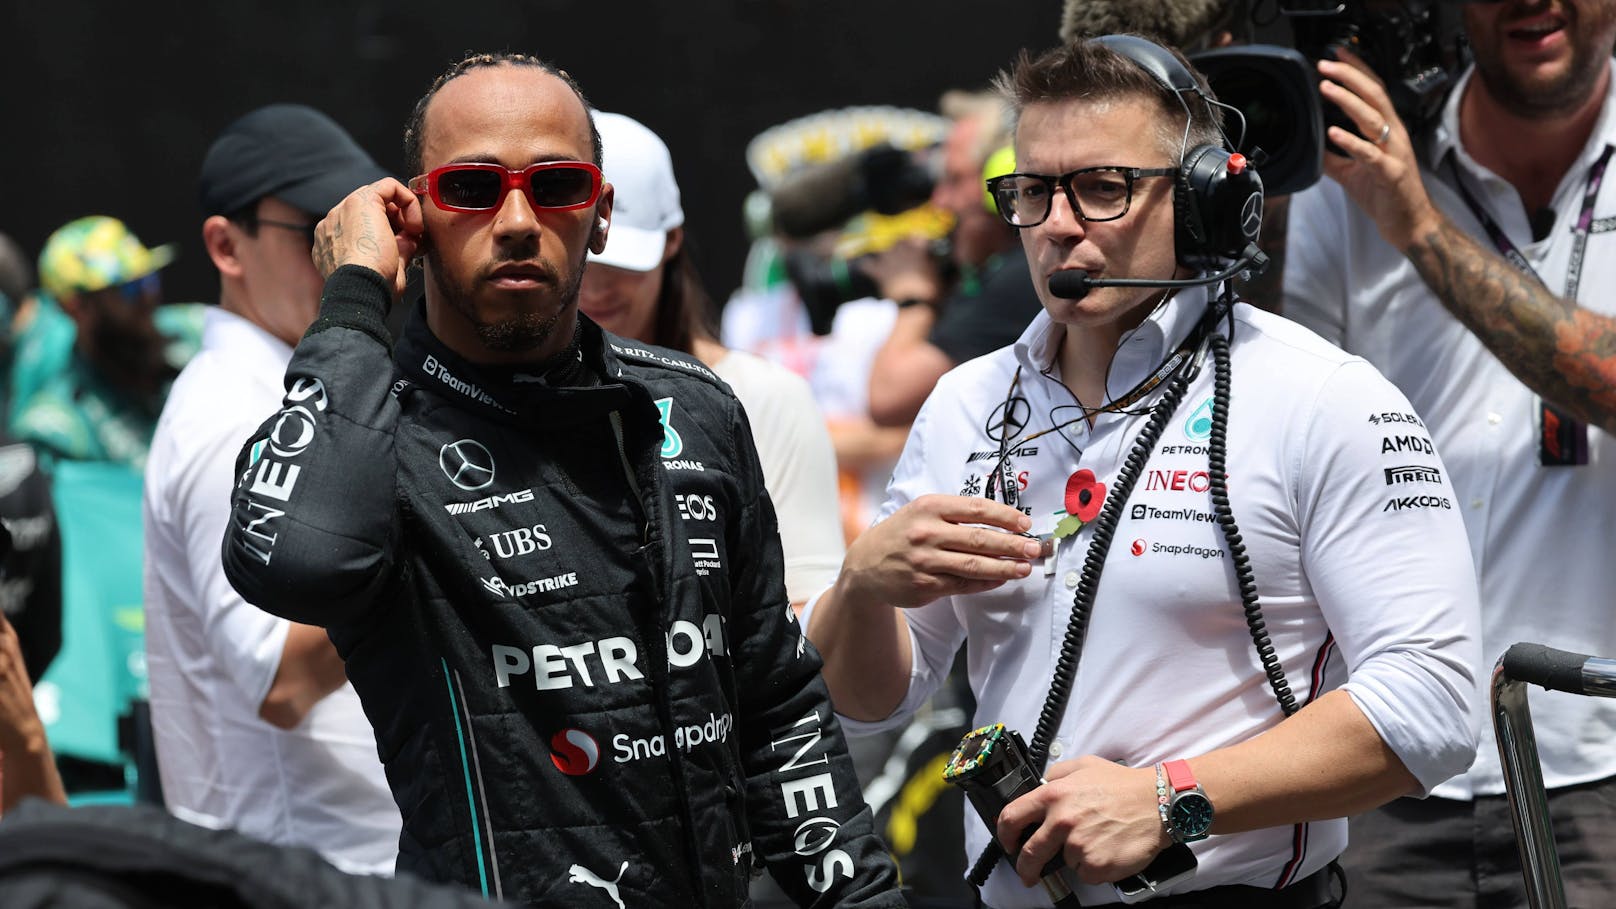 Geht nach Hamilton nächster Top-Mann bei Mercedes?